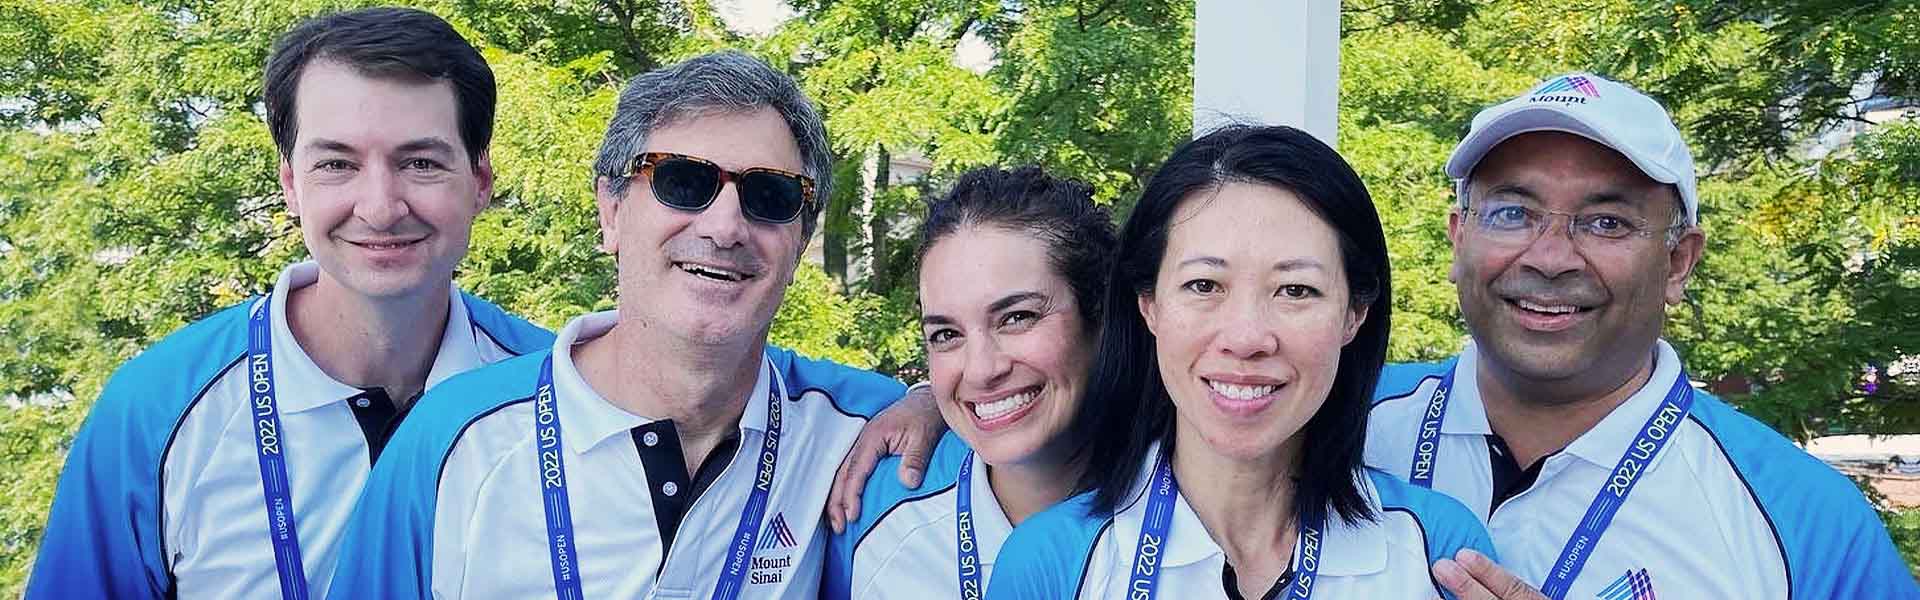 US Open Mount Sinai team of doctors